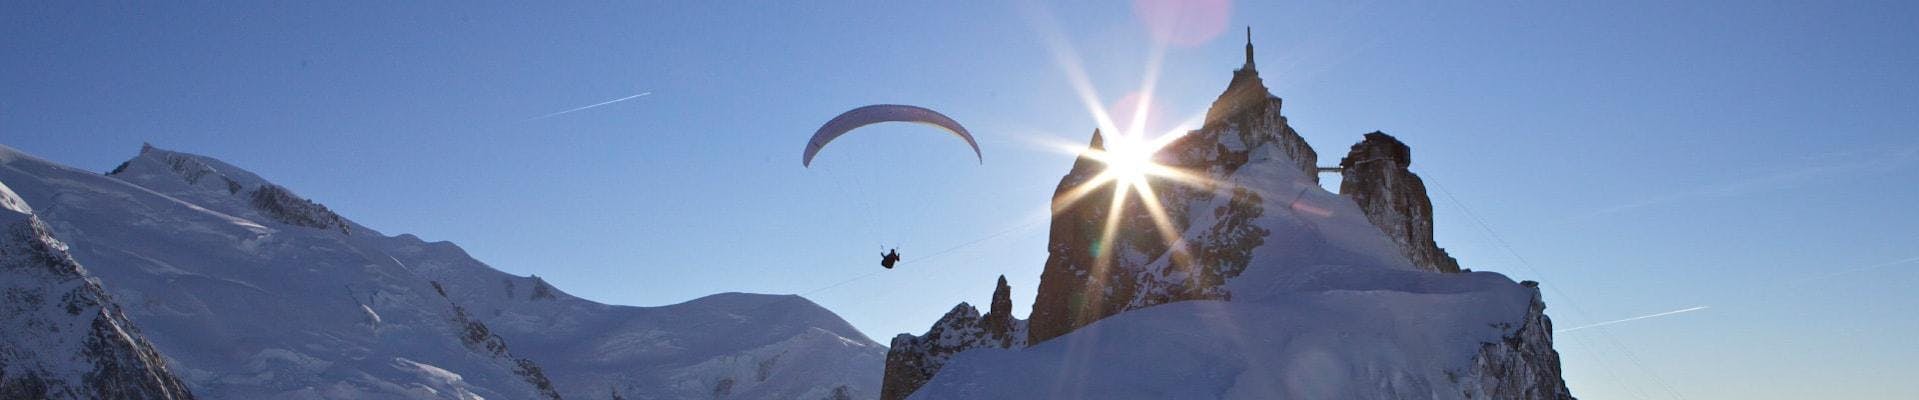 A paragliding pilot from Kailash Paragliding is doing a Tandem Paragliding Flight from Plan de l'Aiguille against a mountain backdrop.